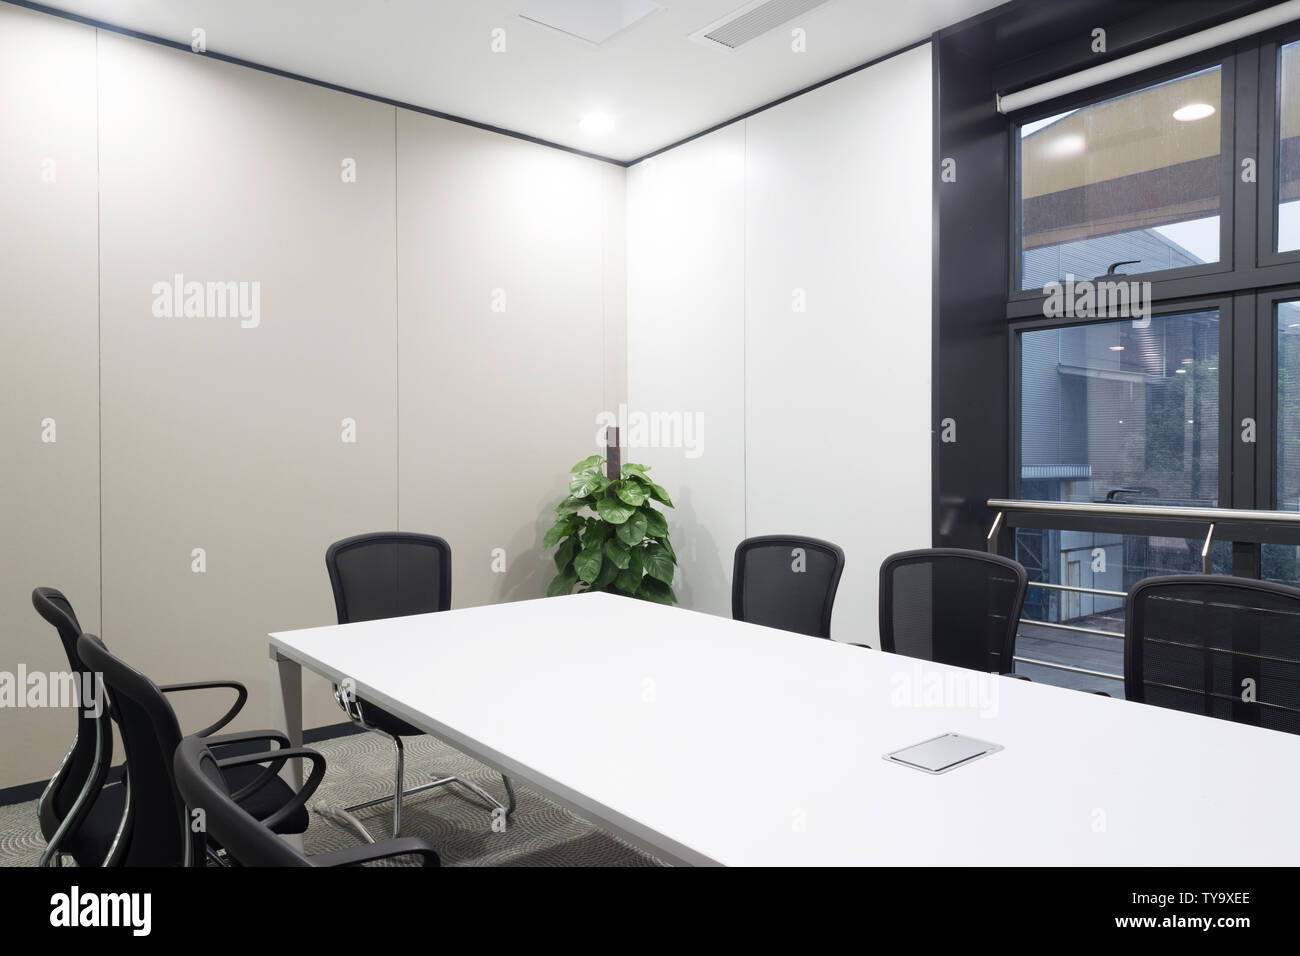 Modern Office Meeting Room Interior Stock Photo 257759222